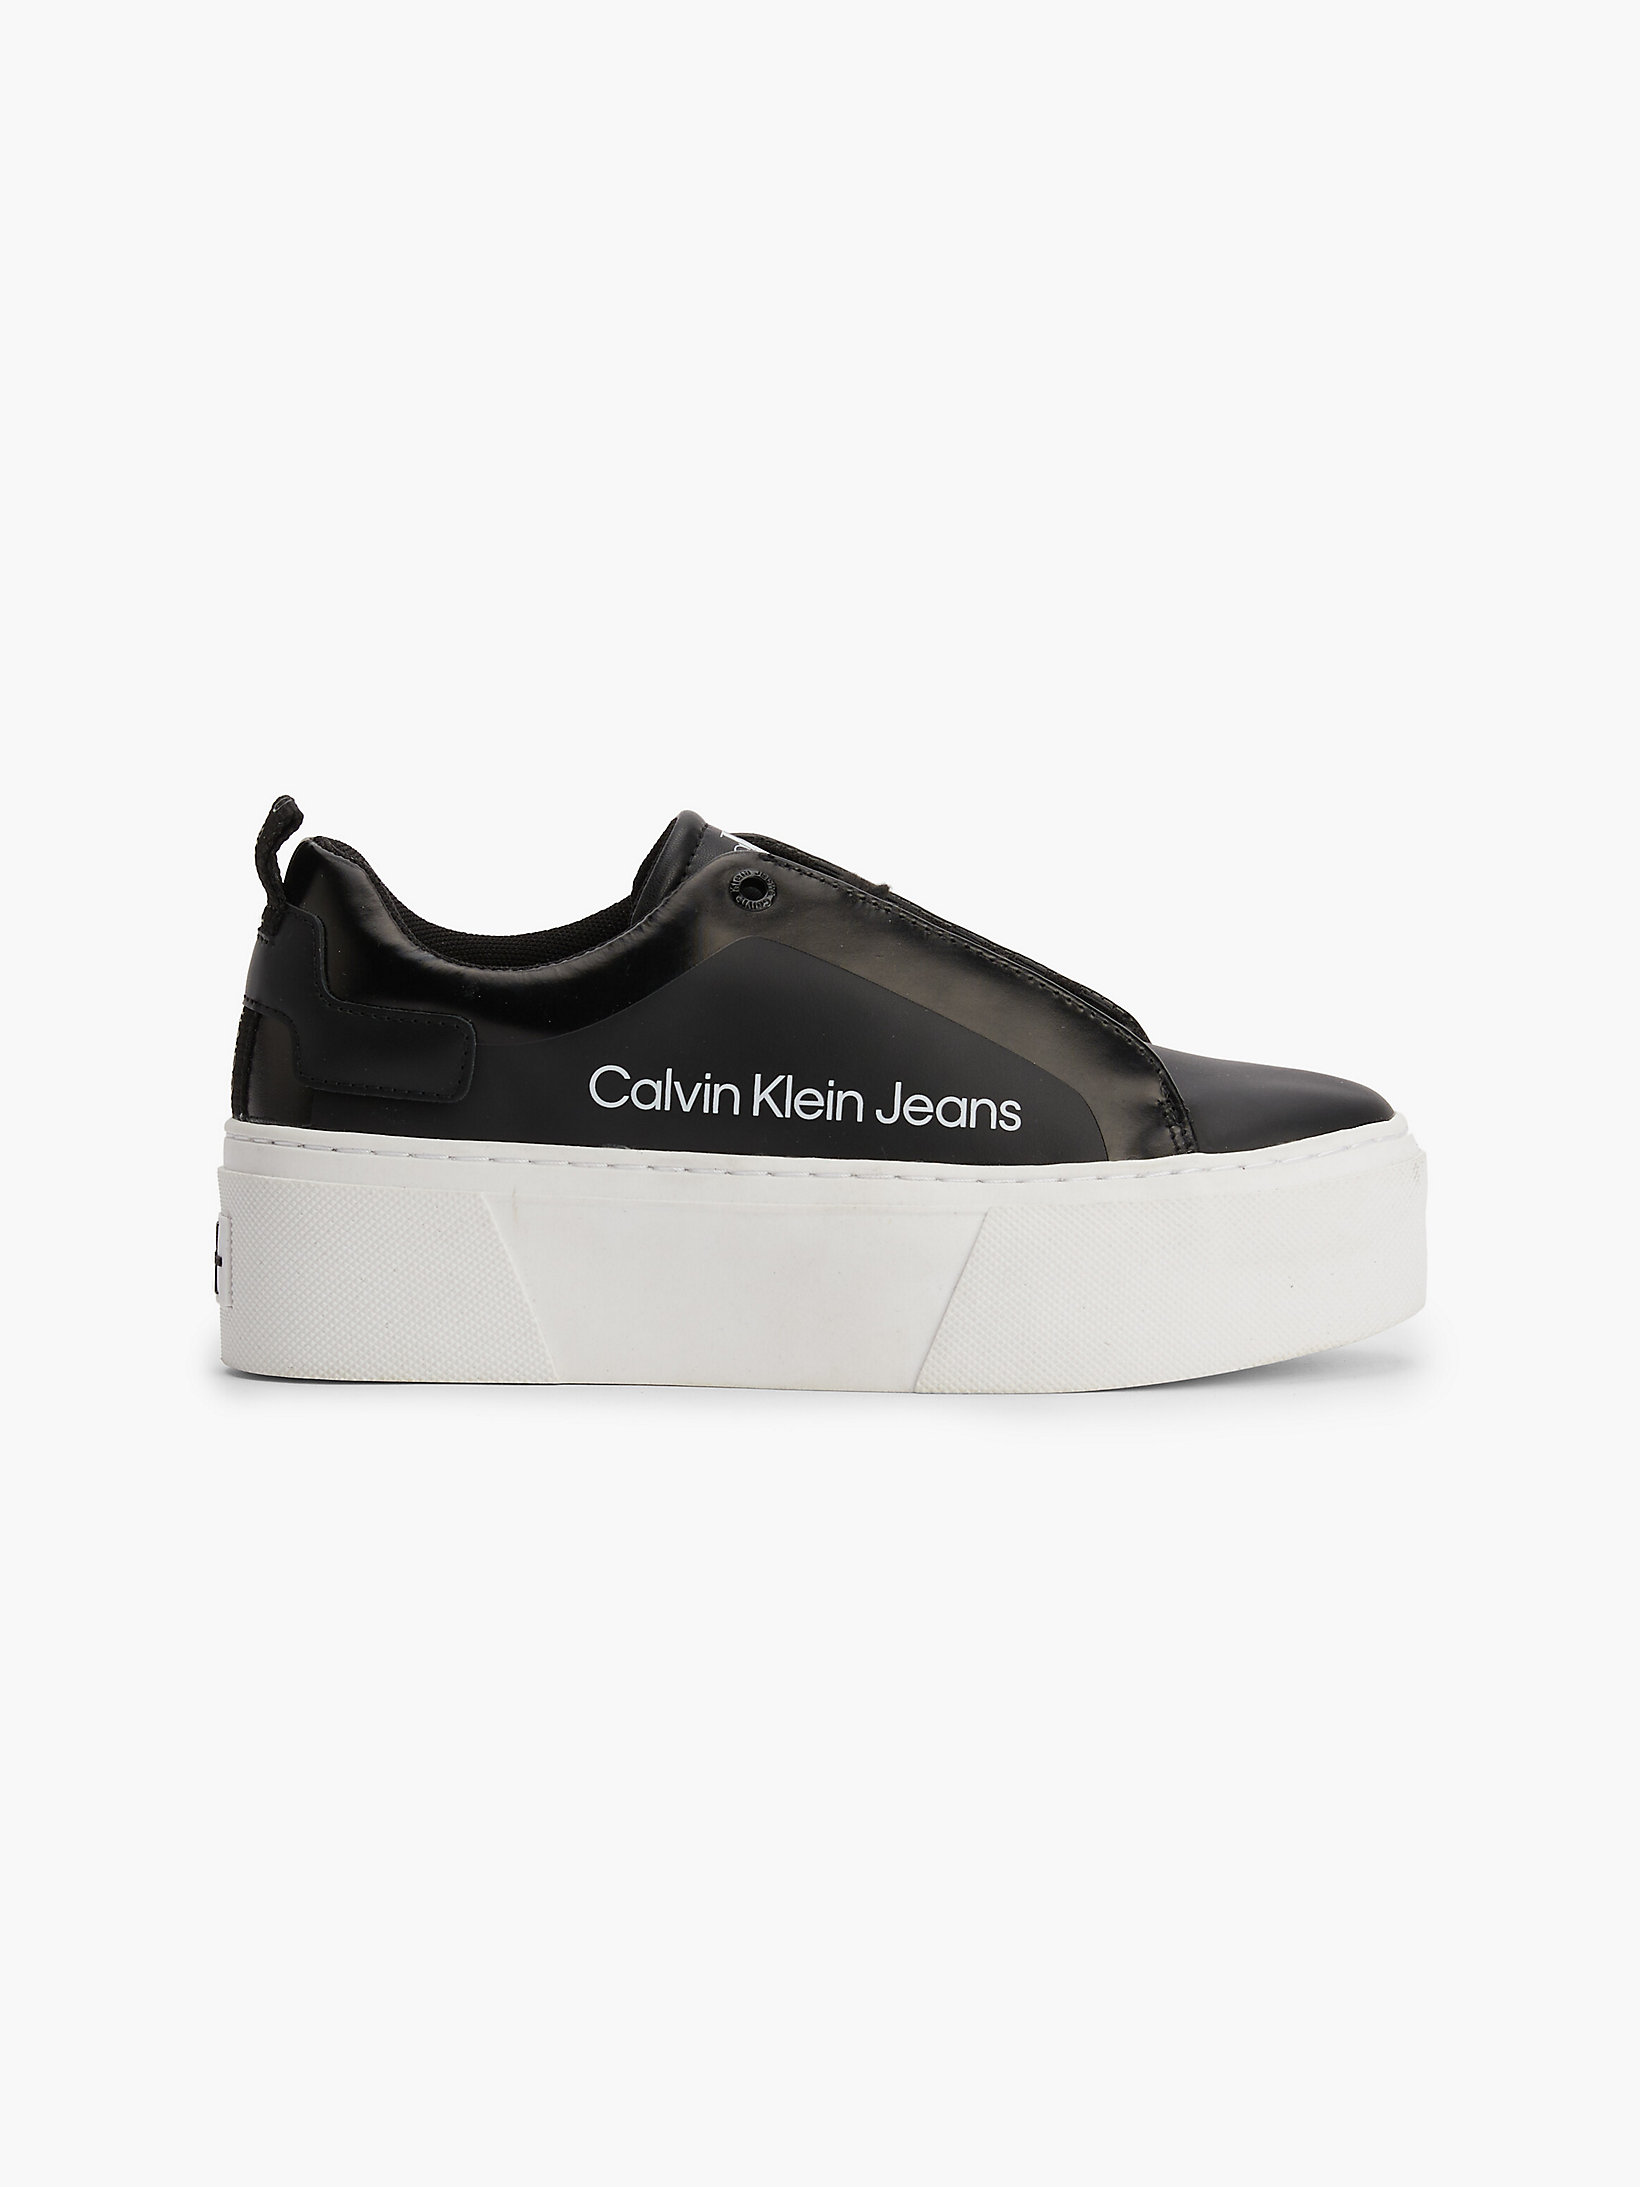 Black > Skórzane Buty Sportowe Na Platformie > undefined Kobiety - Calvin Klein